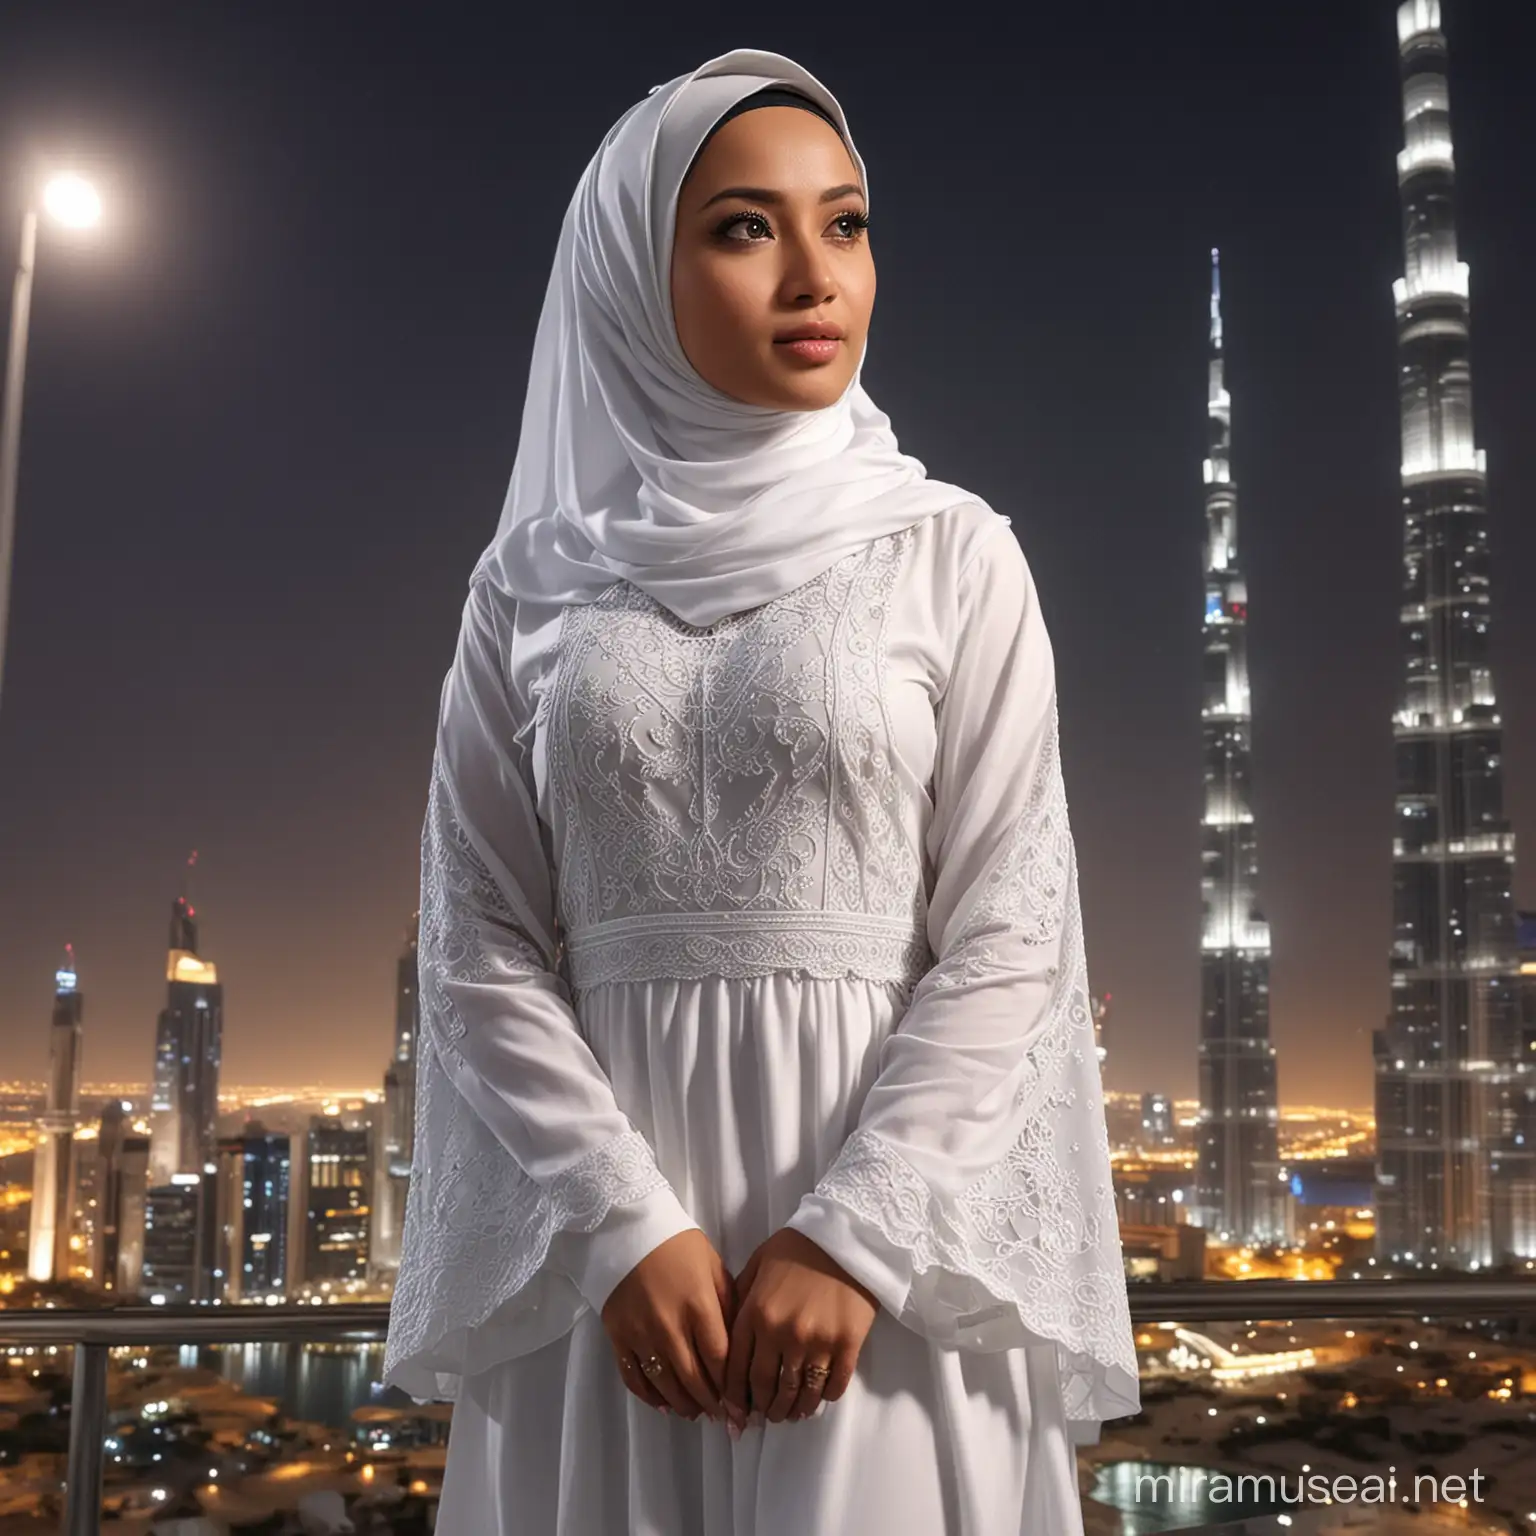 Indonesian Hijab Woman Model Poses at Night in Dubai